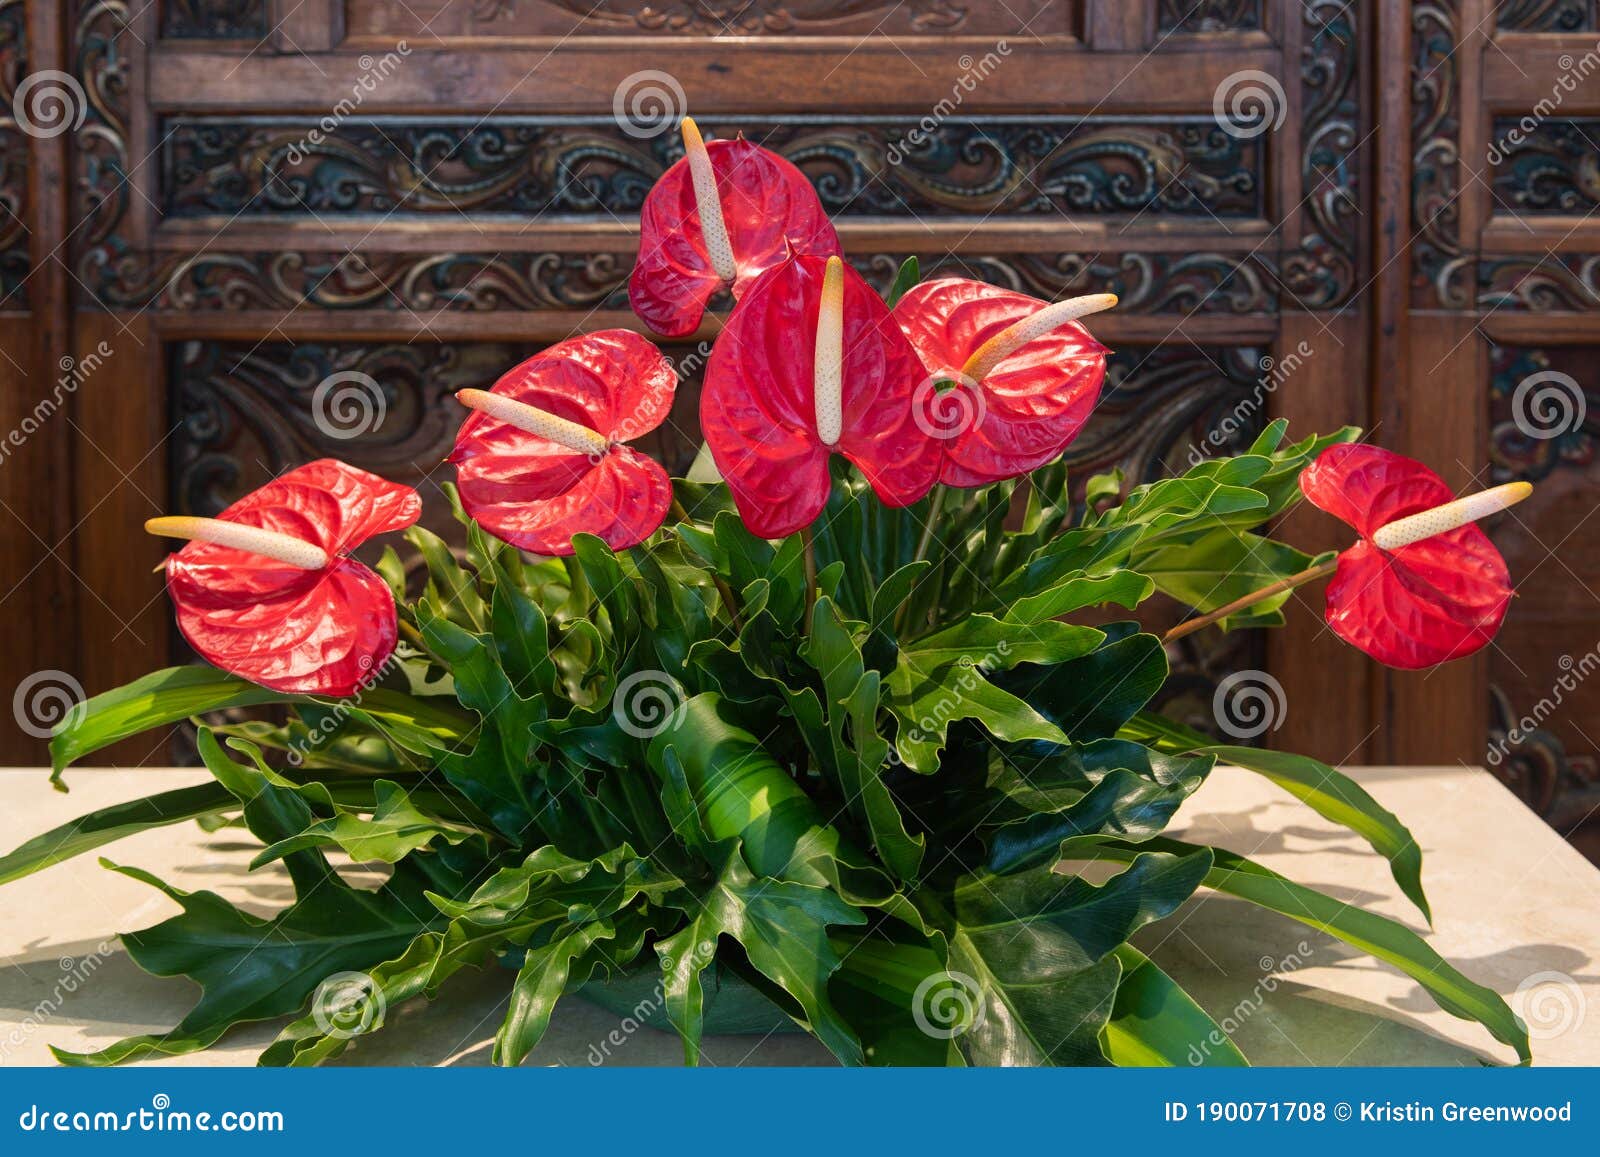 Beautiful Bouquet Arrangement Of Anthurium Flowers Stock Photo Image Of Flower Freshness 190071708